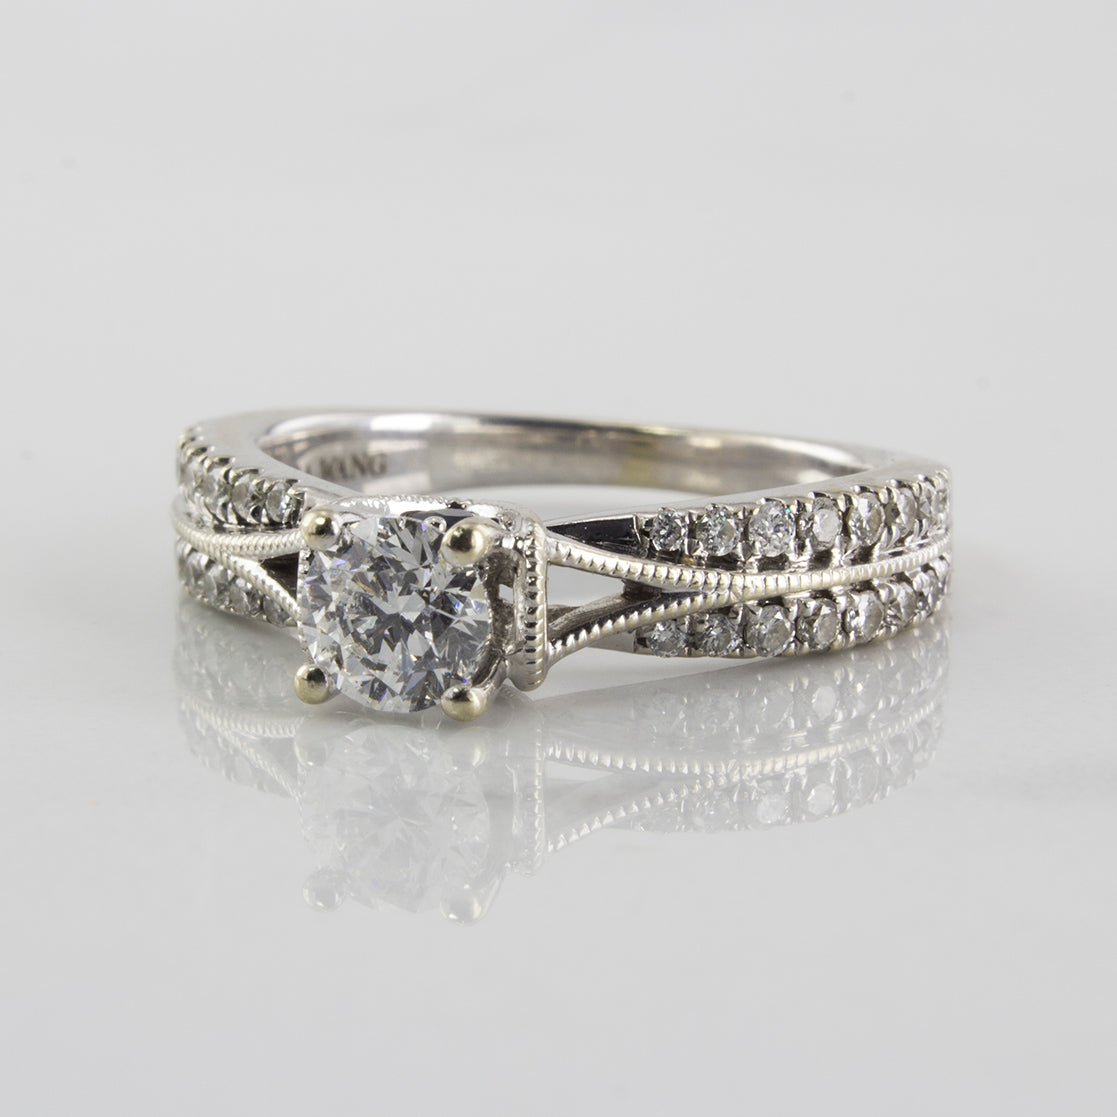 'Vera Wang' Engagement Ring With Hidden Blue Sapphires | 0.75ctw | SZ 6 |